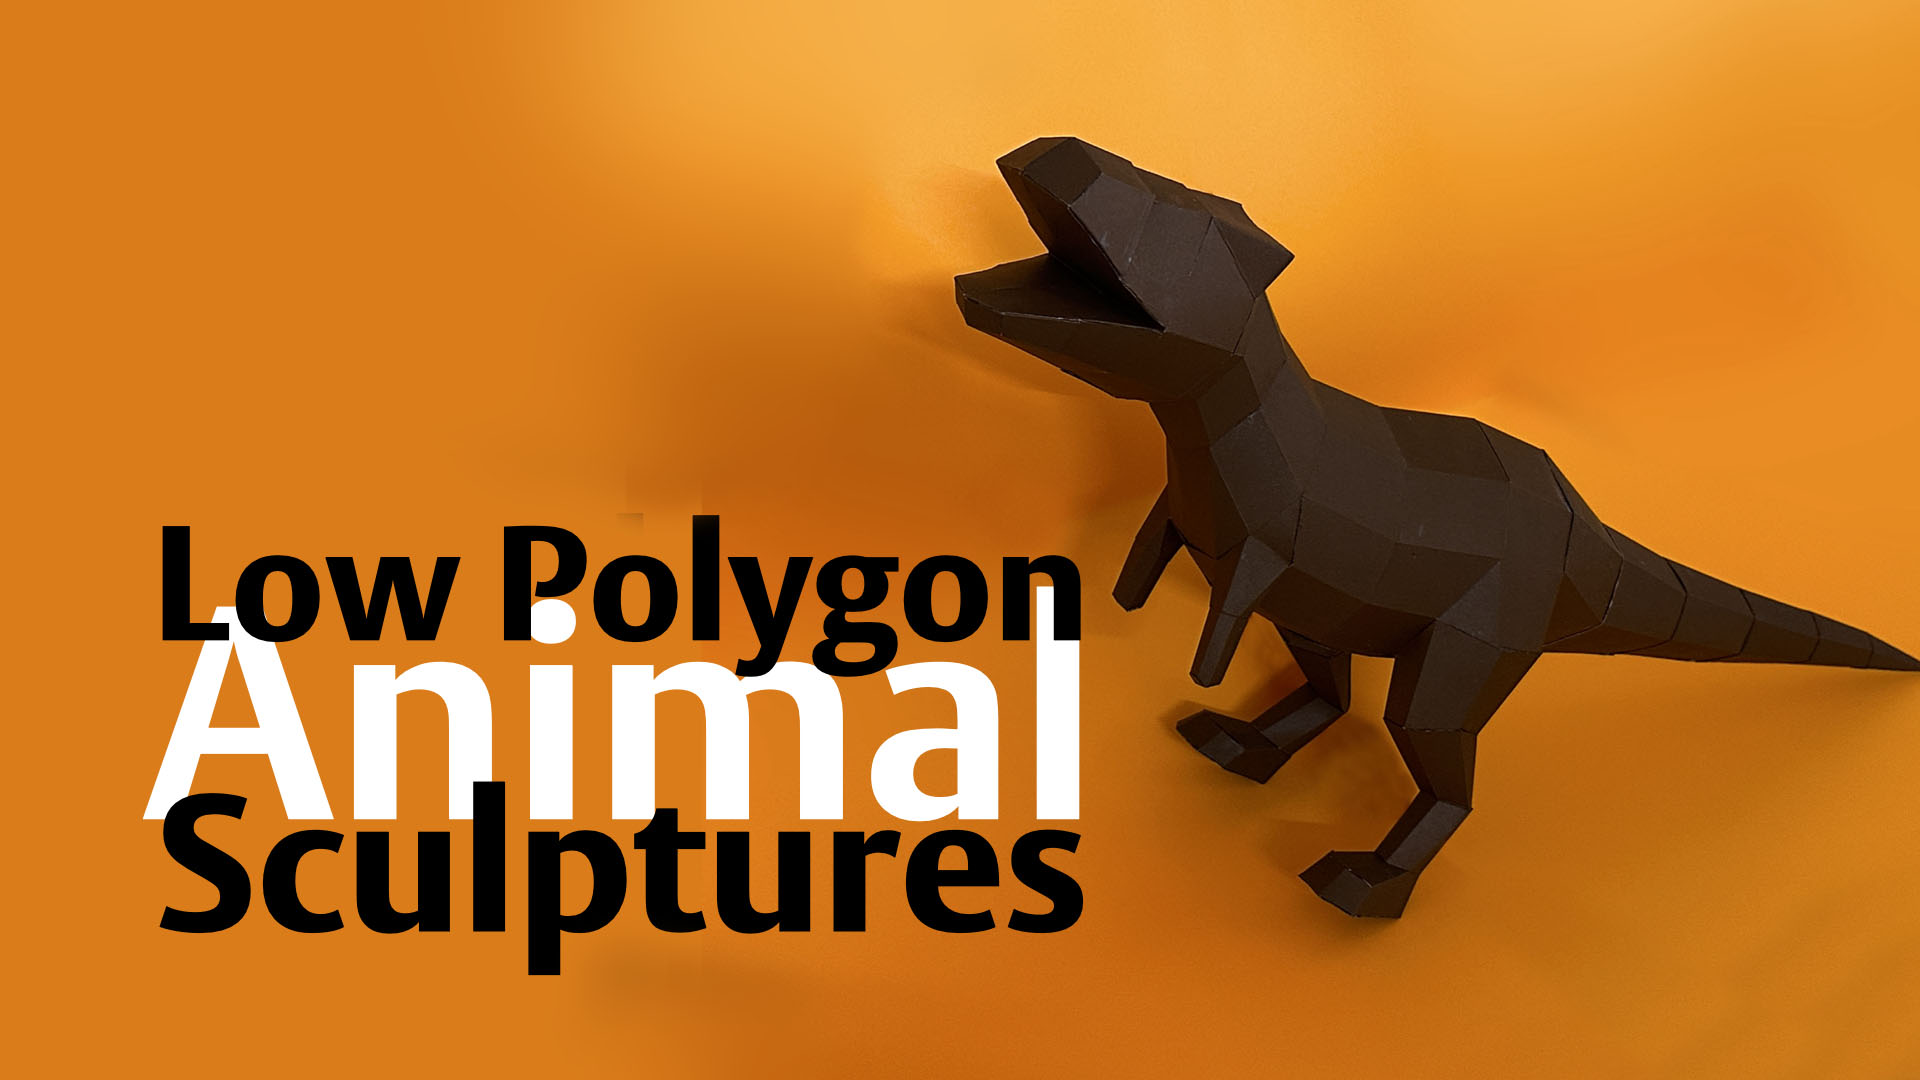 Low Polygon Animal Sculptures